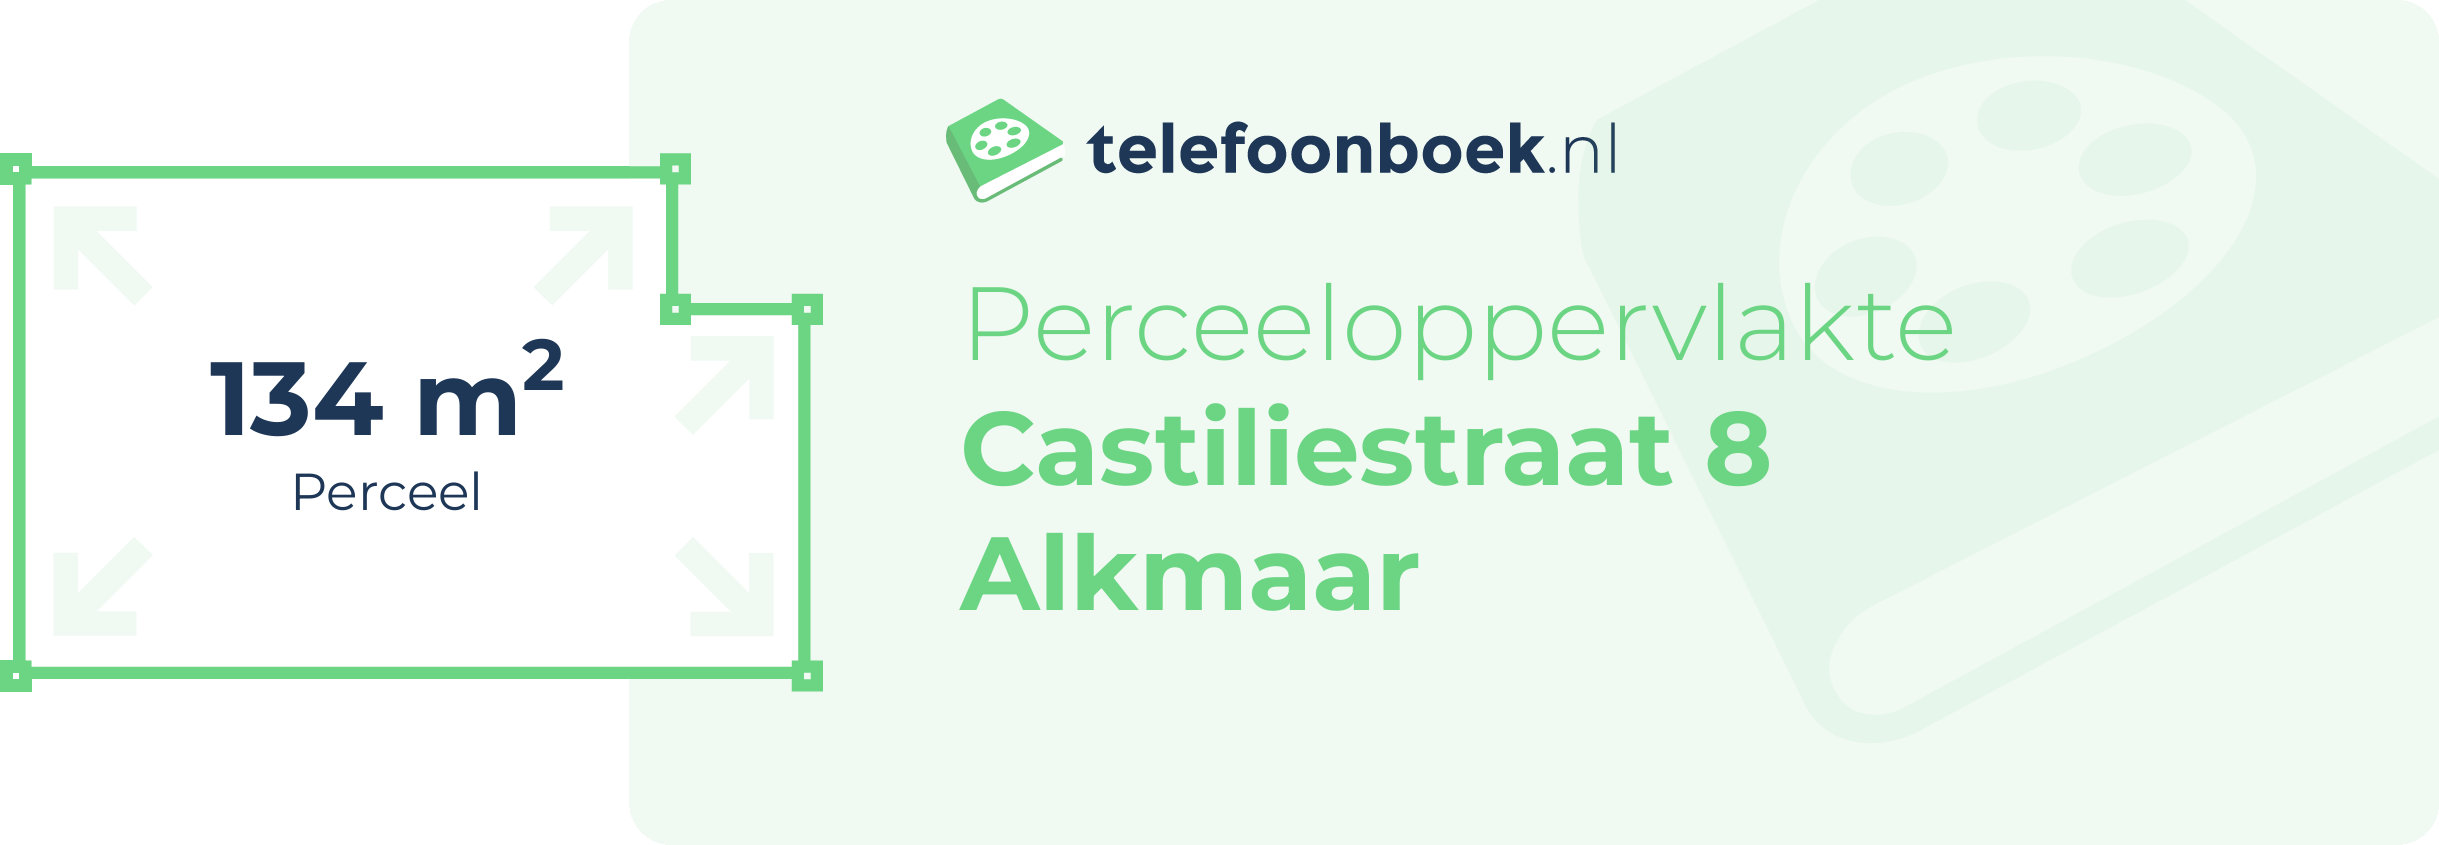 Perceeloppervlakte Castiliestraat 8 Alkmaar